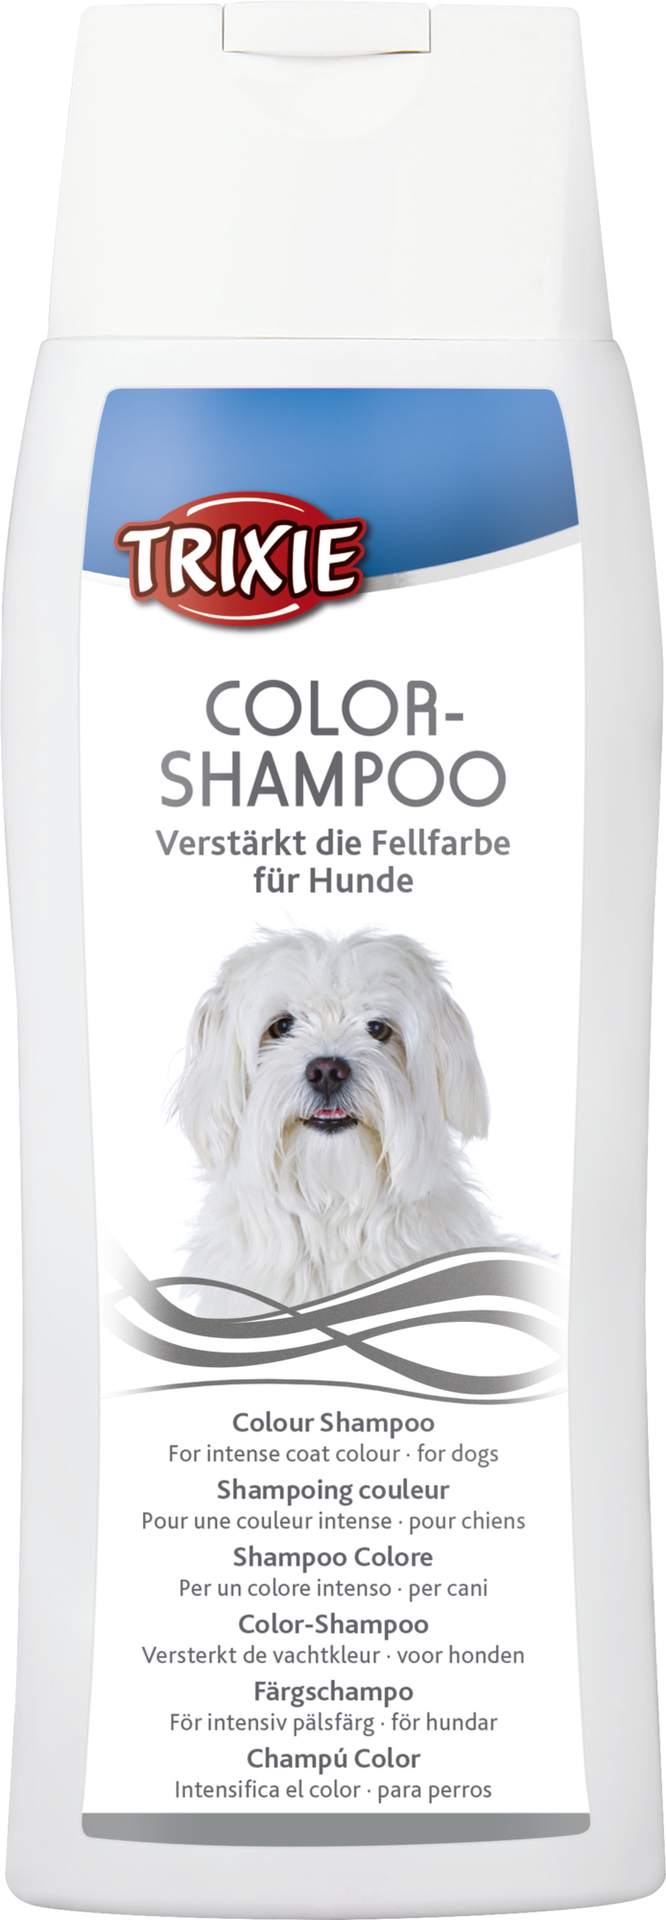 Color-Shampoo